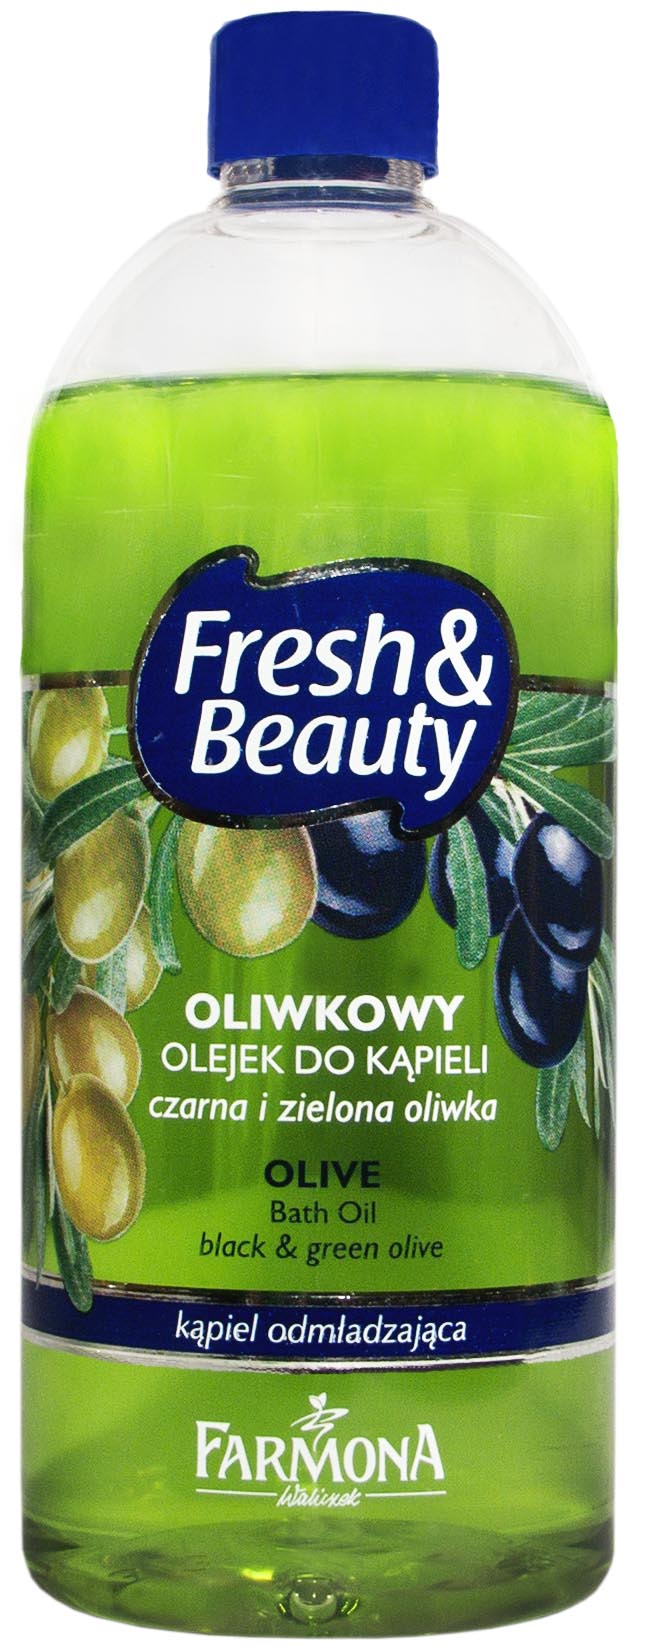 Farmona_Fresh&Beauty_olejek_oliwka